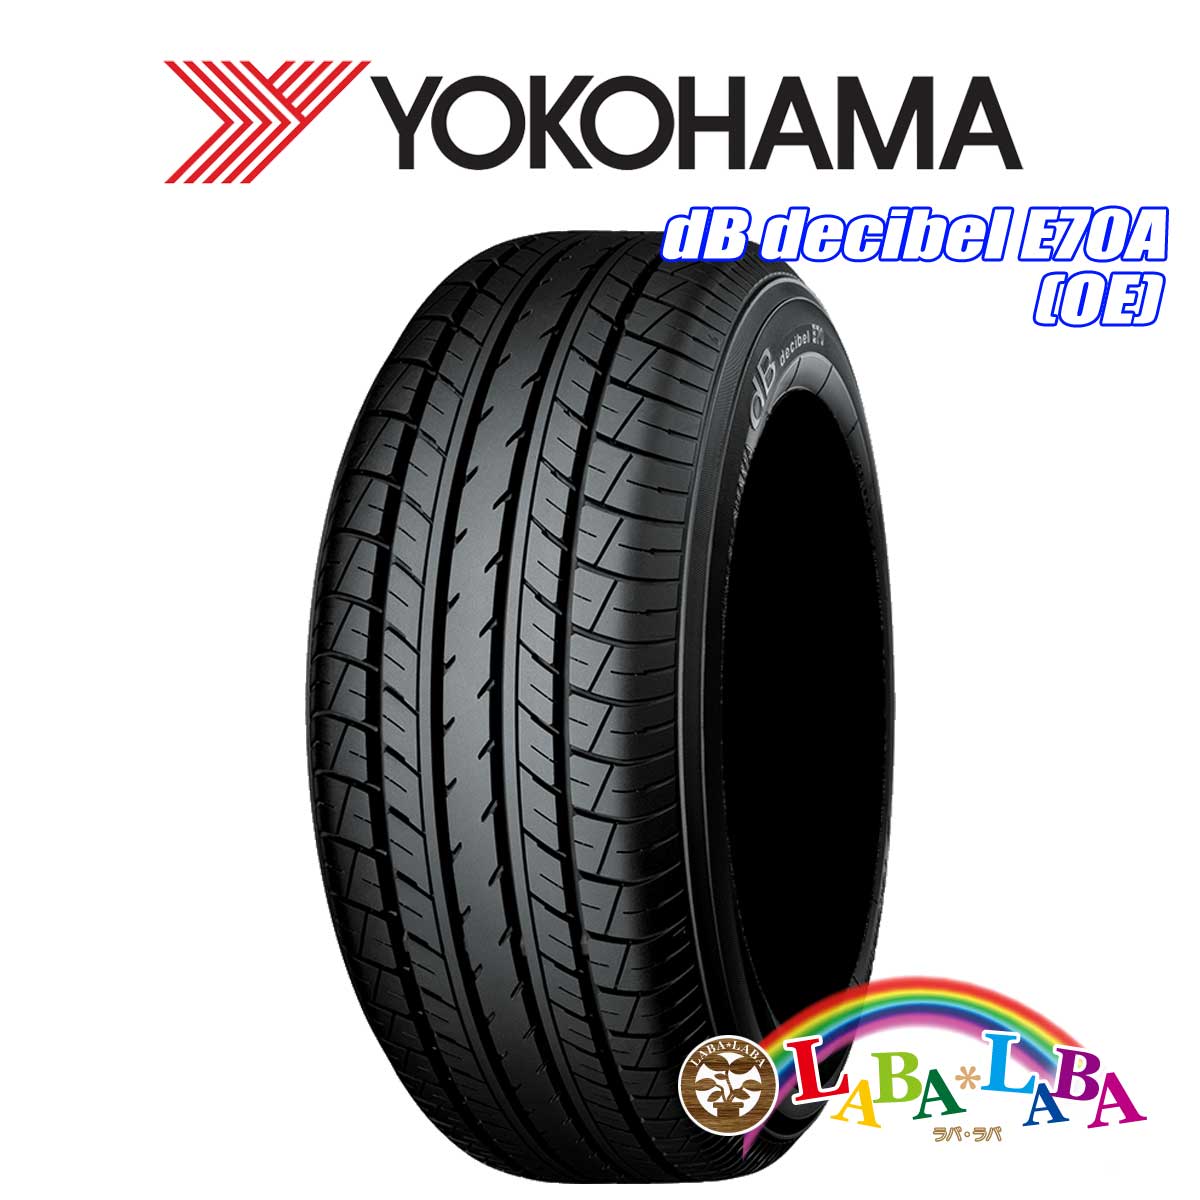 YOKOHAMA dB decibel E70A 205/60R16 92H サマータイヤ 新車装着用 OE 2022年製 ●